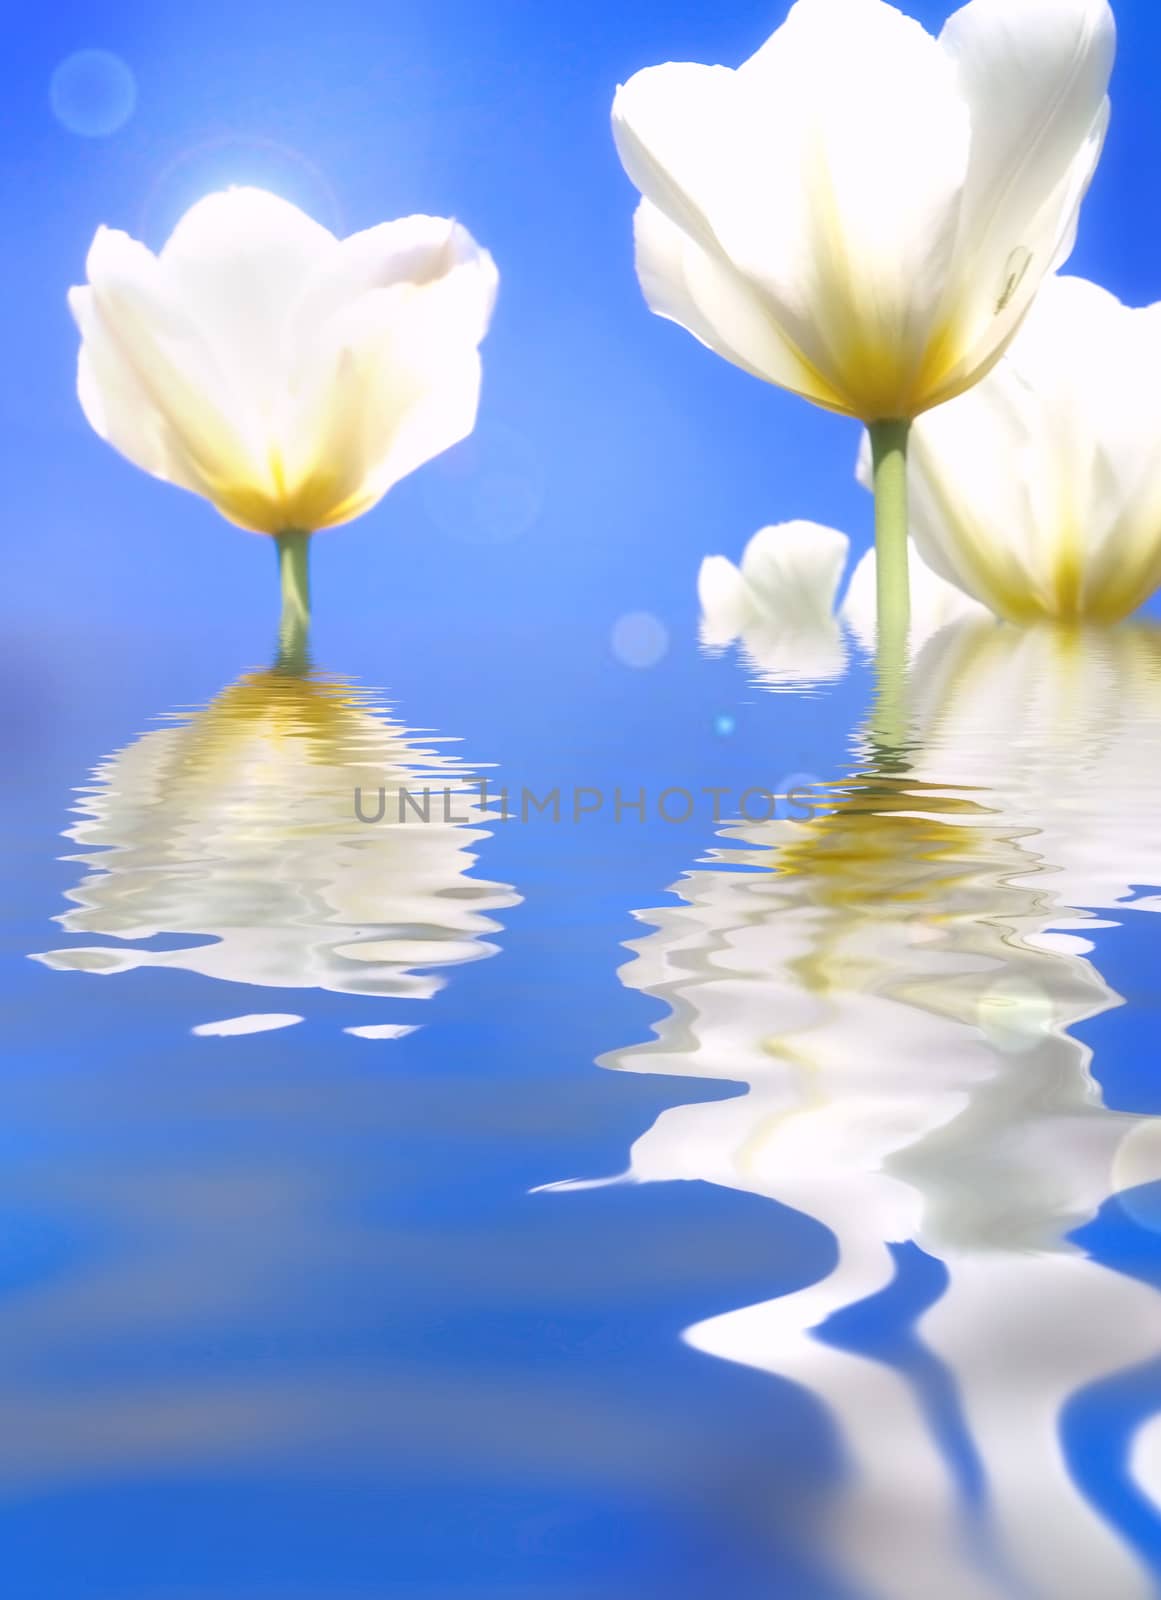 Water reflection of beautiful tulips